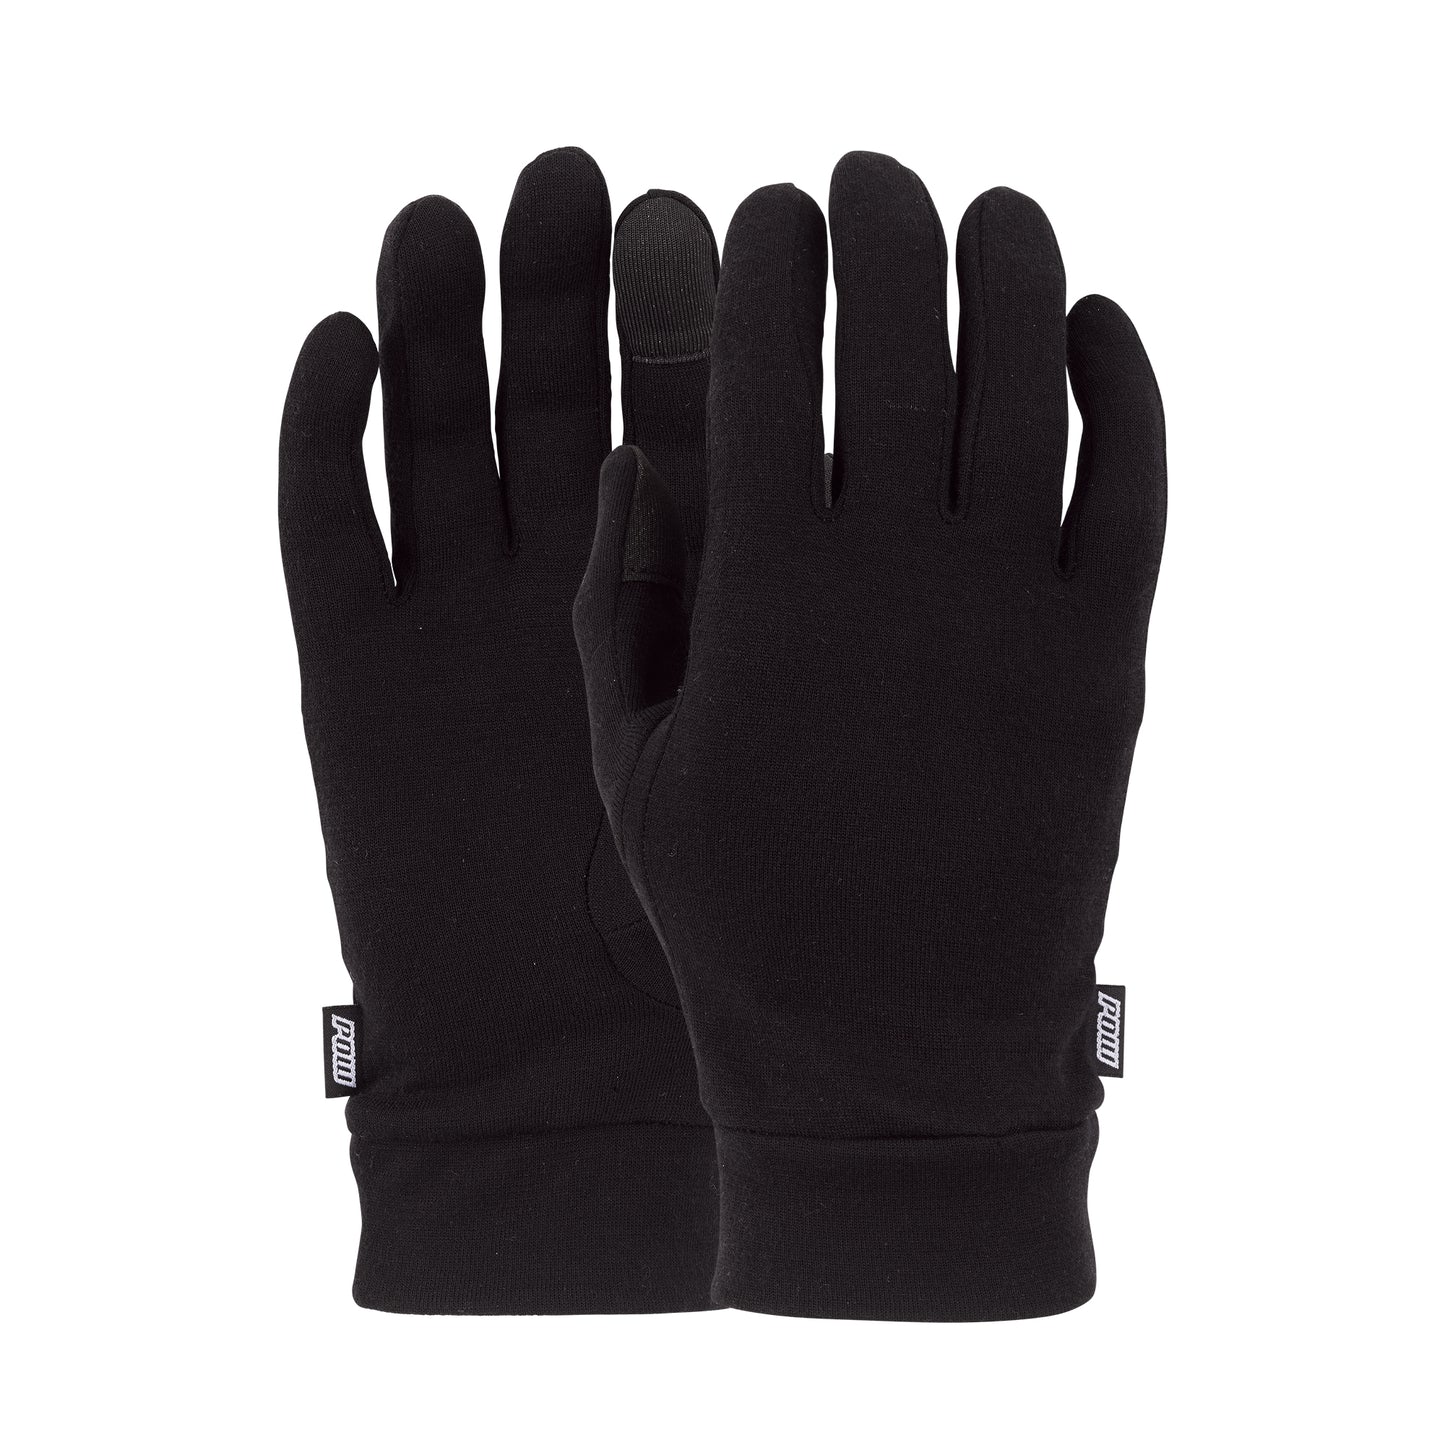 POW Gloves - Crescent GTX Long Cuff Women's Ski / Snowboard Glove's